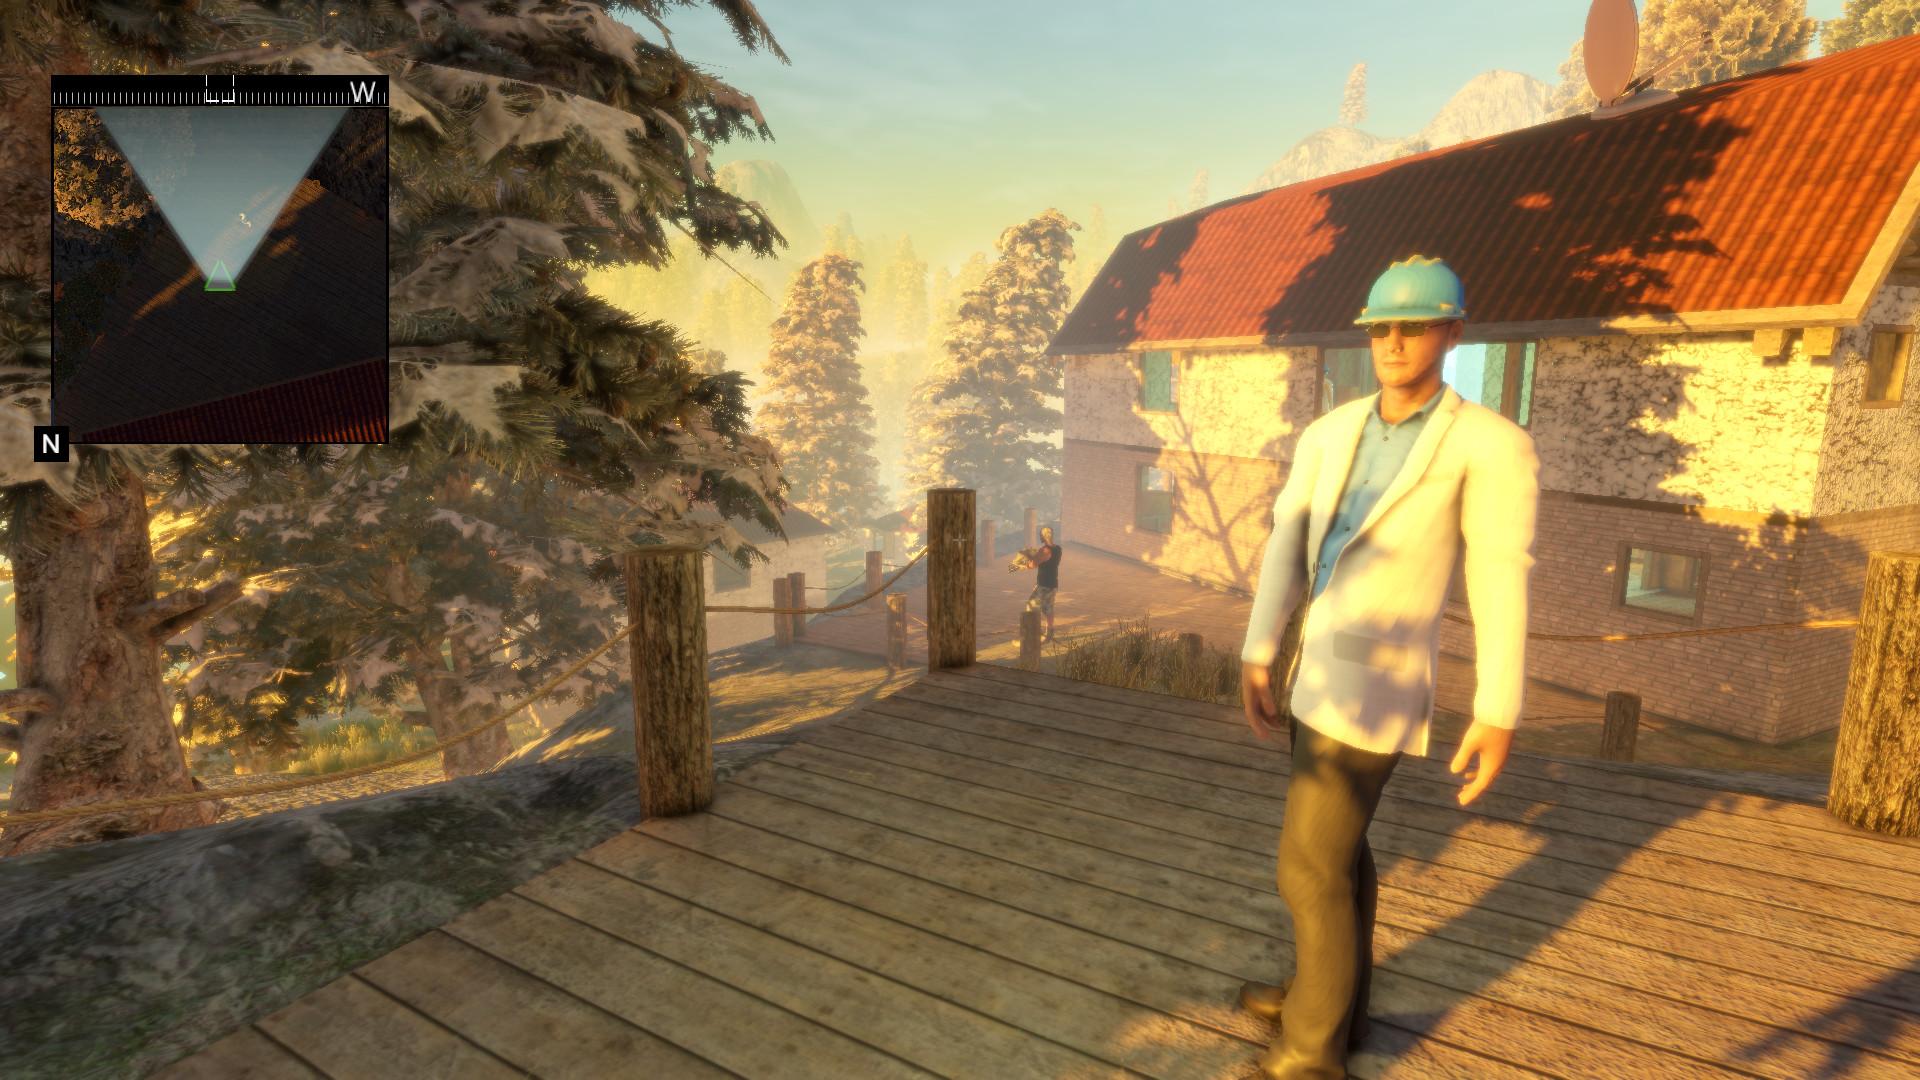 Screenshot №7 from game Endangered